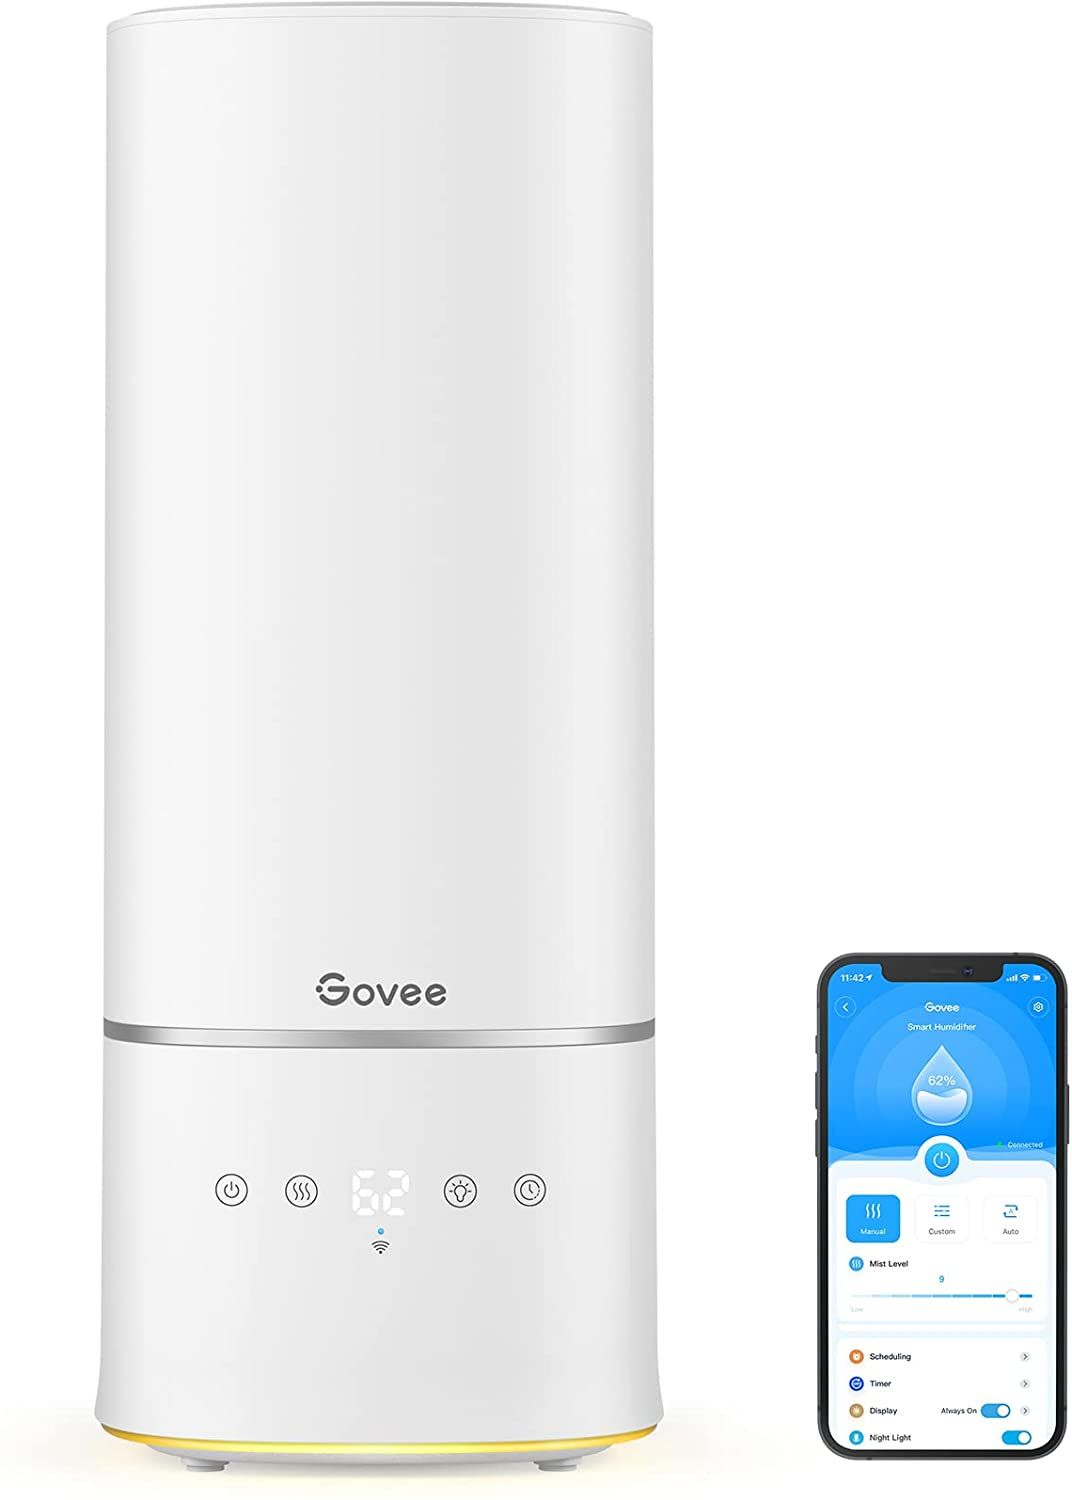 Govee smart humidifier